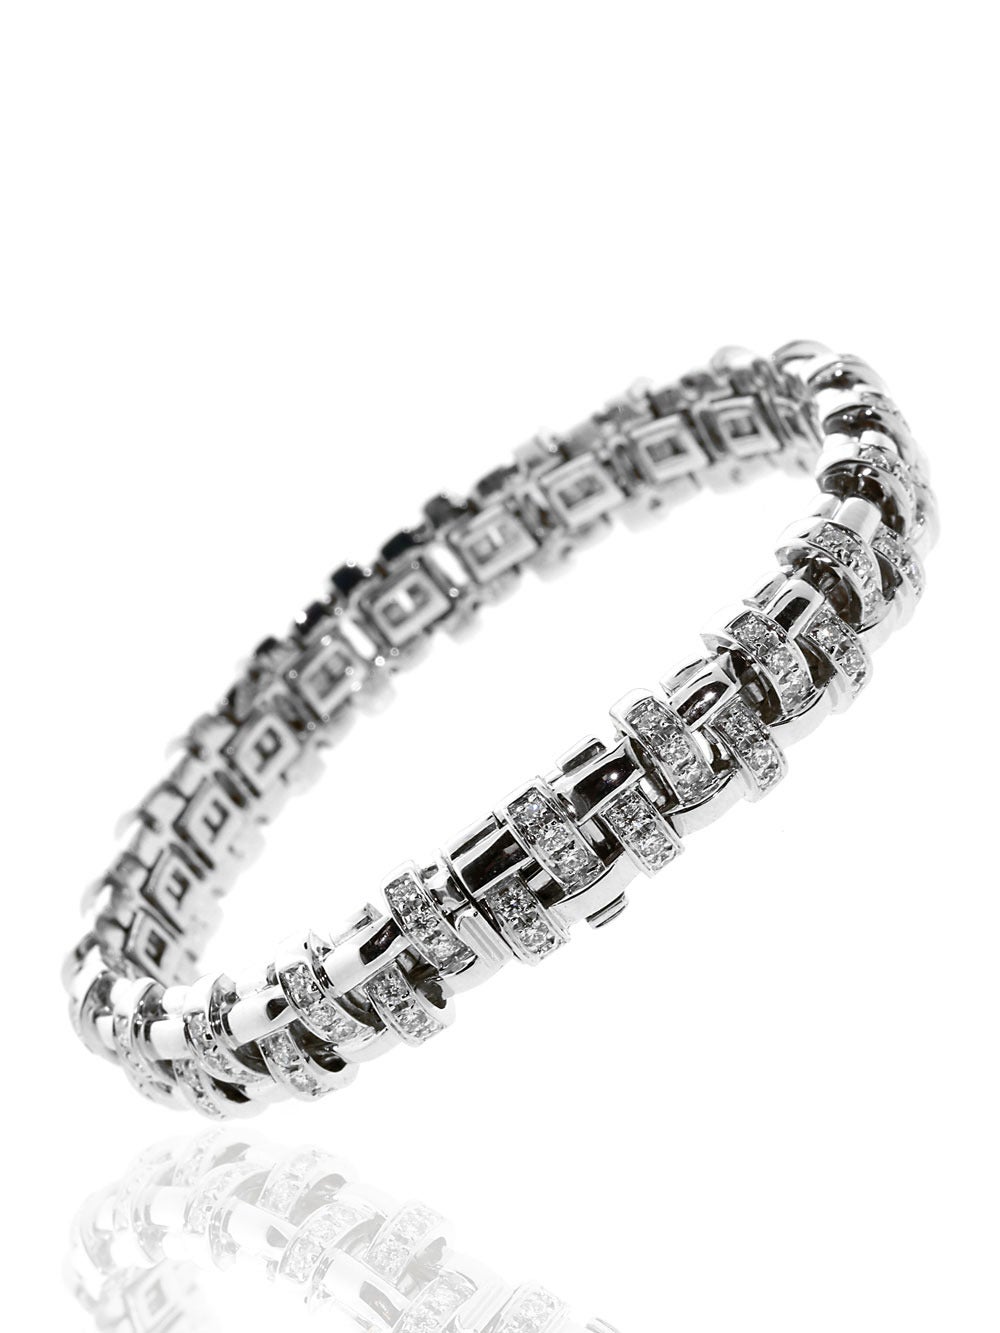 A classic Tiffany & Co diamond tennis bracelet featuring Round Brilliant Cut Diamonds Appx 3ct of Vs1 E-F Color. The bracelet measures 7